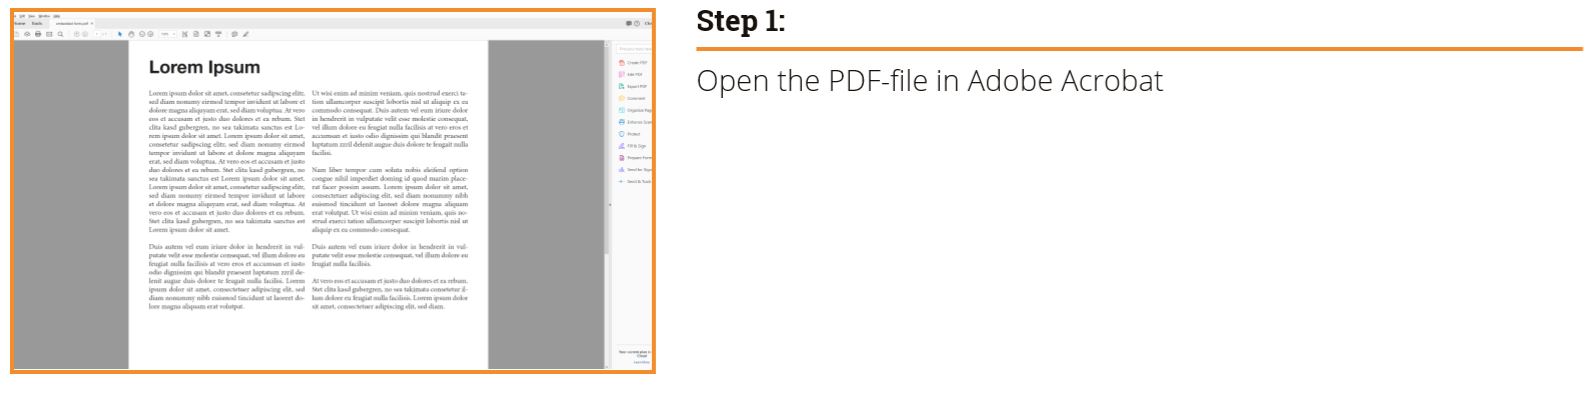 Open PDF files in Adobe Acrobat